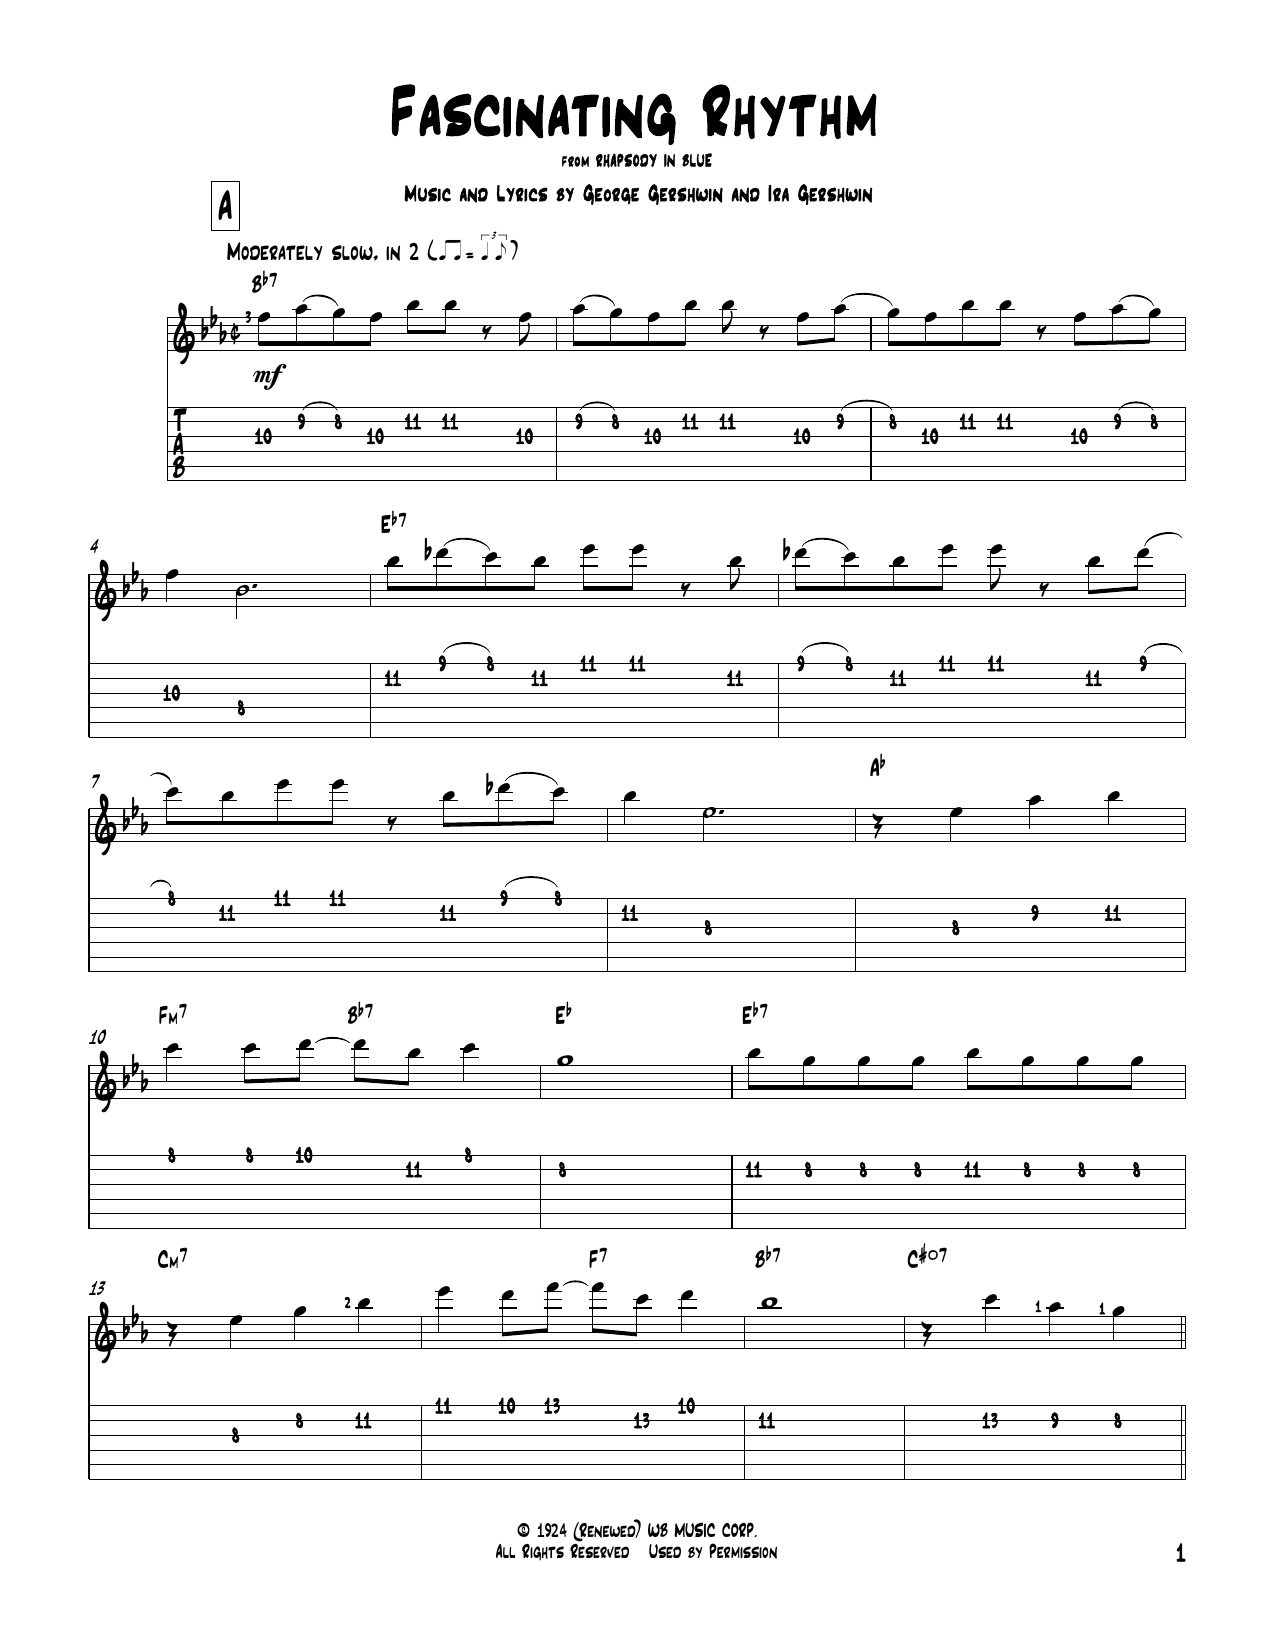 Ira Gershwin Fascinating Rhythm Sheet Music Notes & Chords for Solo Guitar - Download or Print PDF